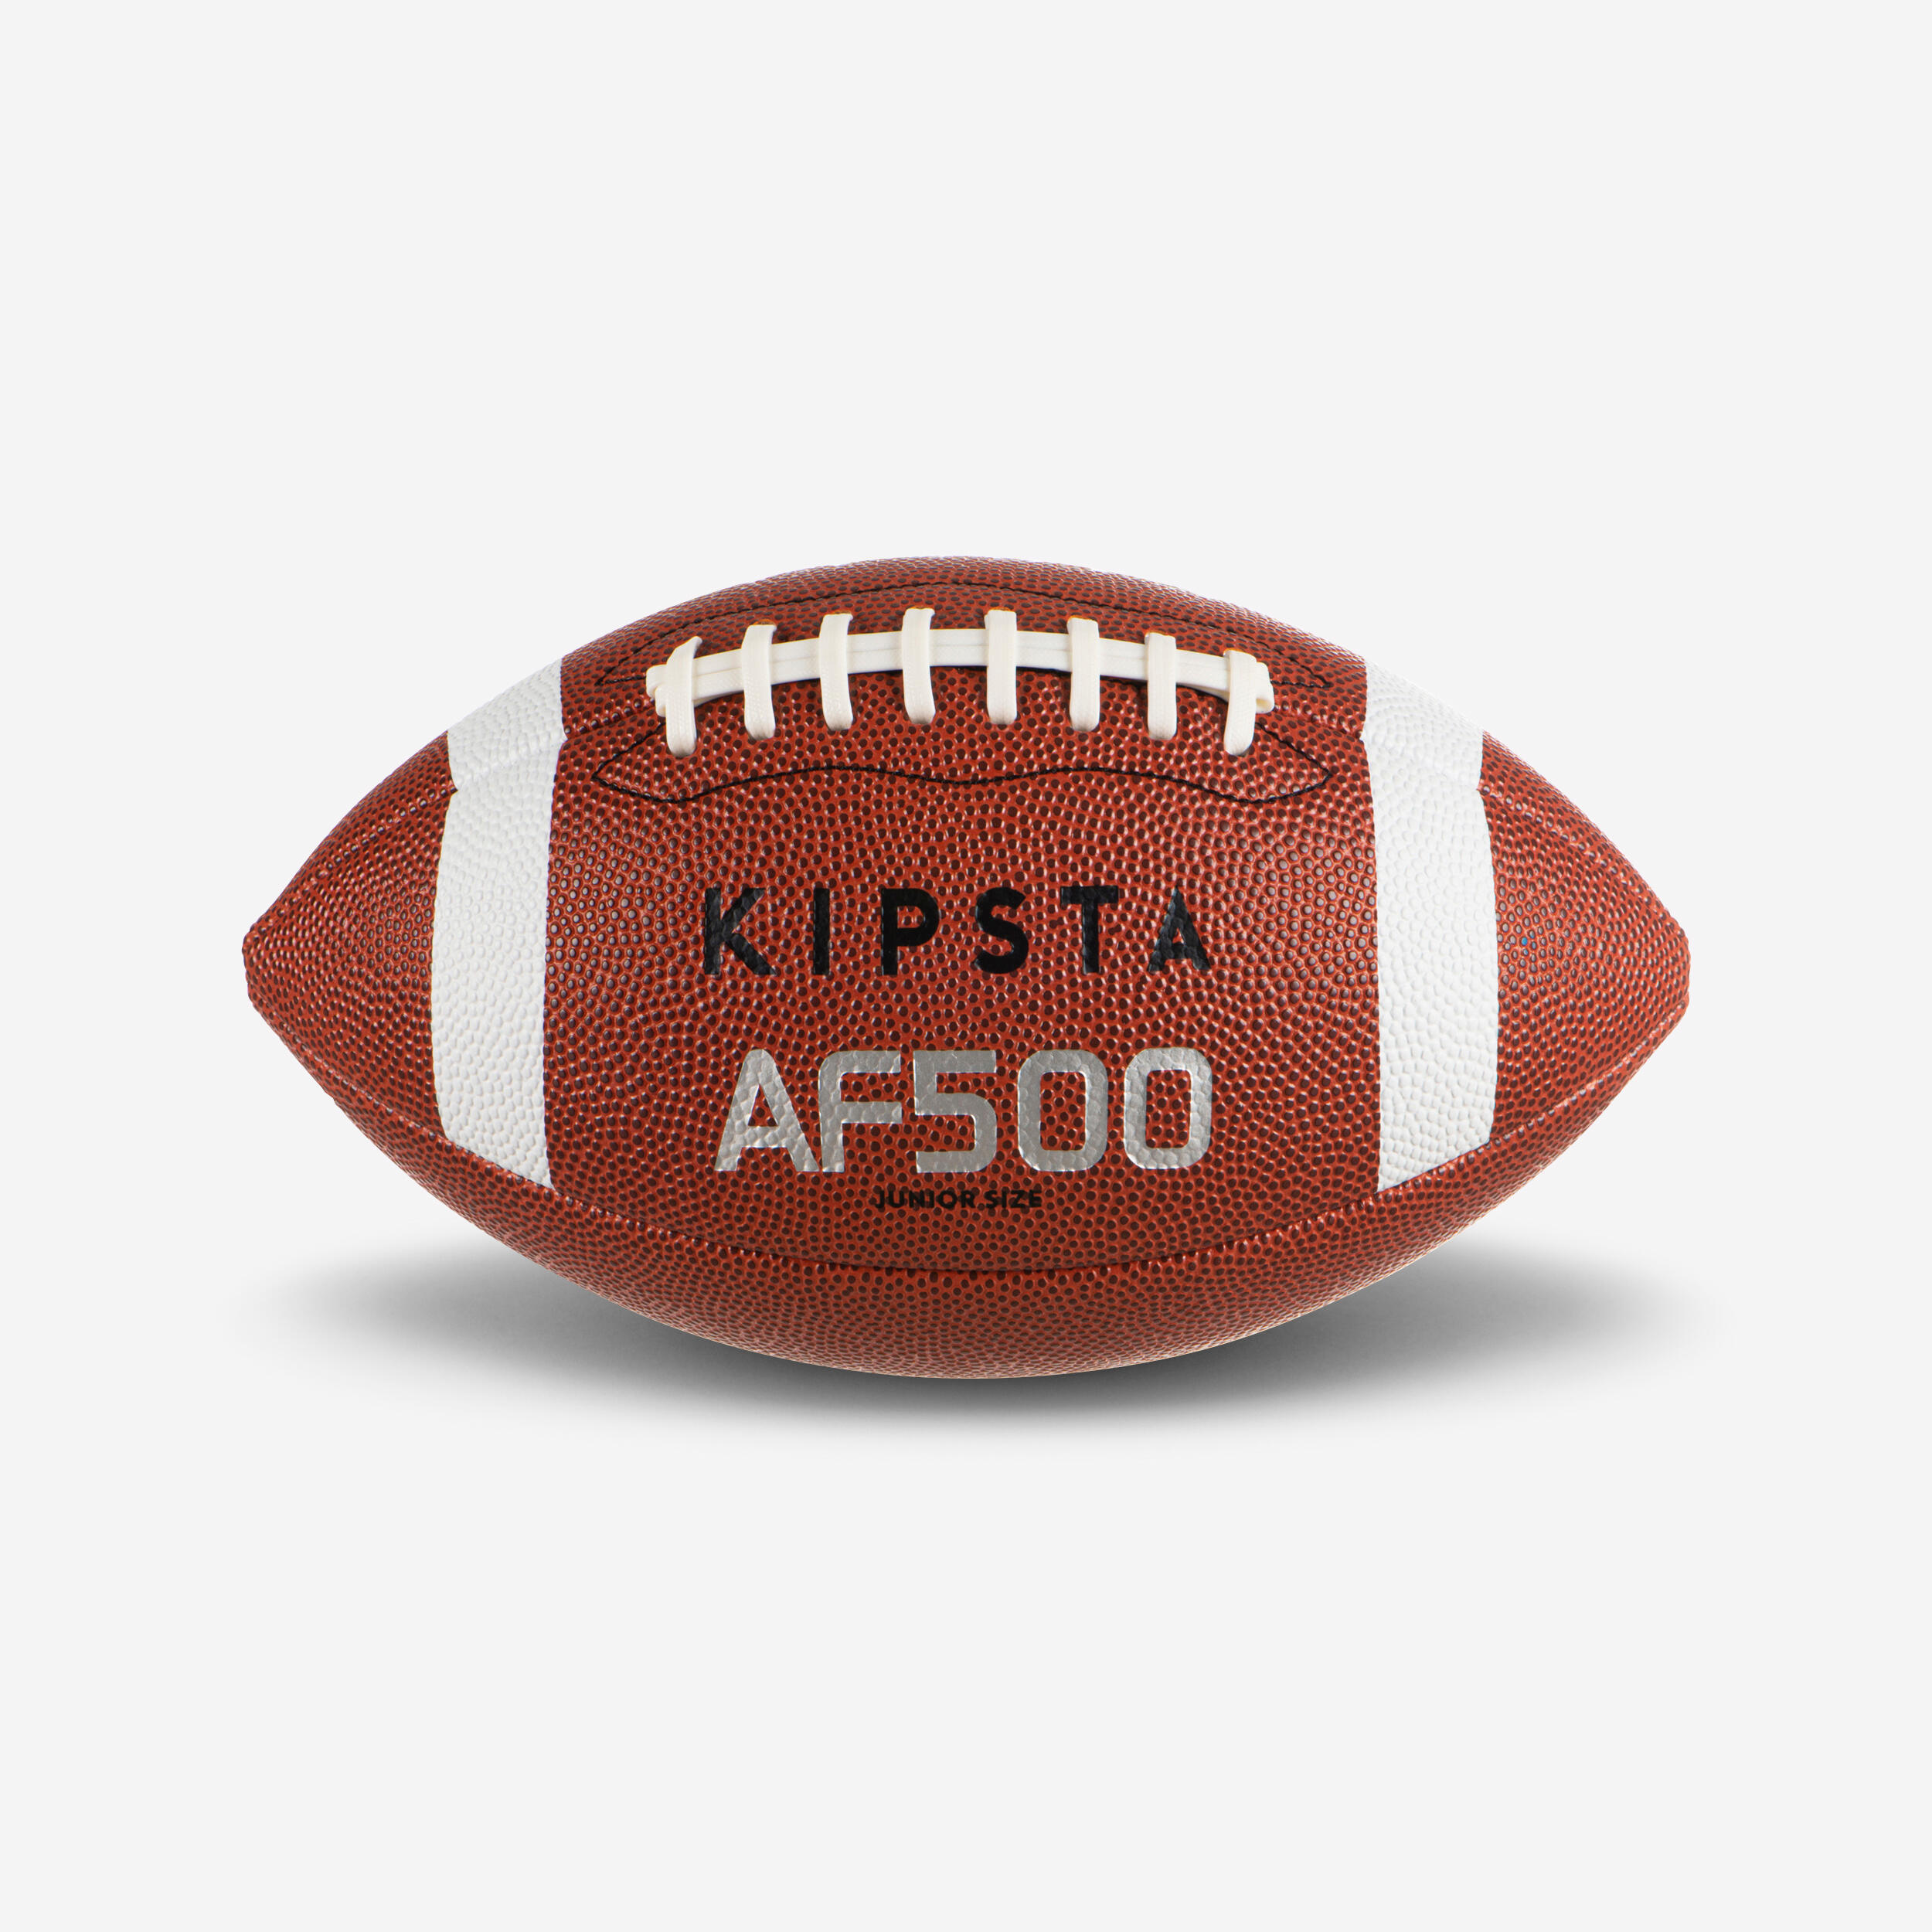 Decathlon | Pallone football americano AF 500 marrone |  Kipsta